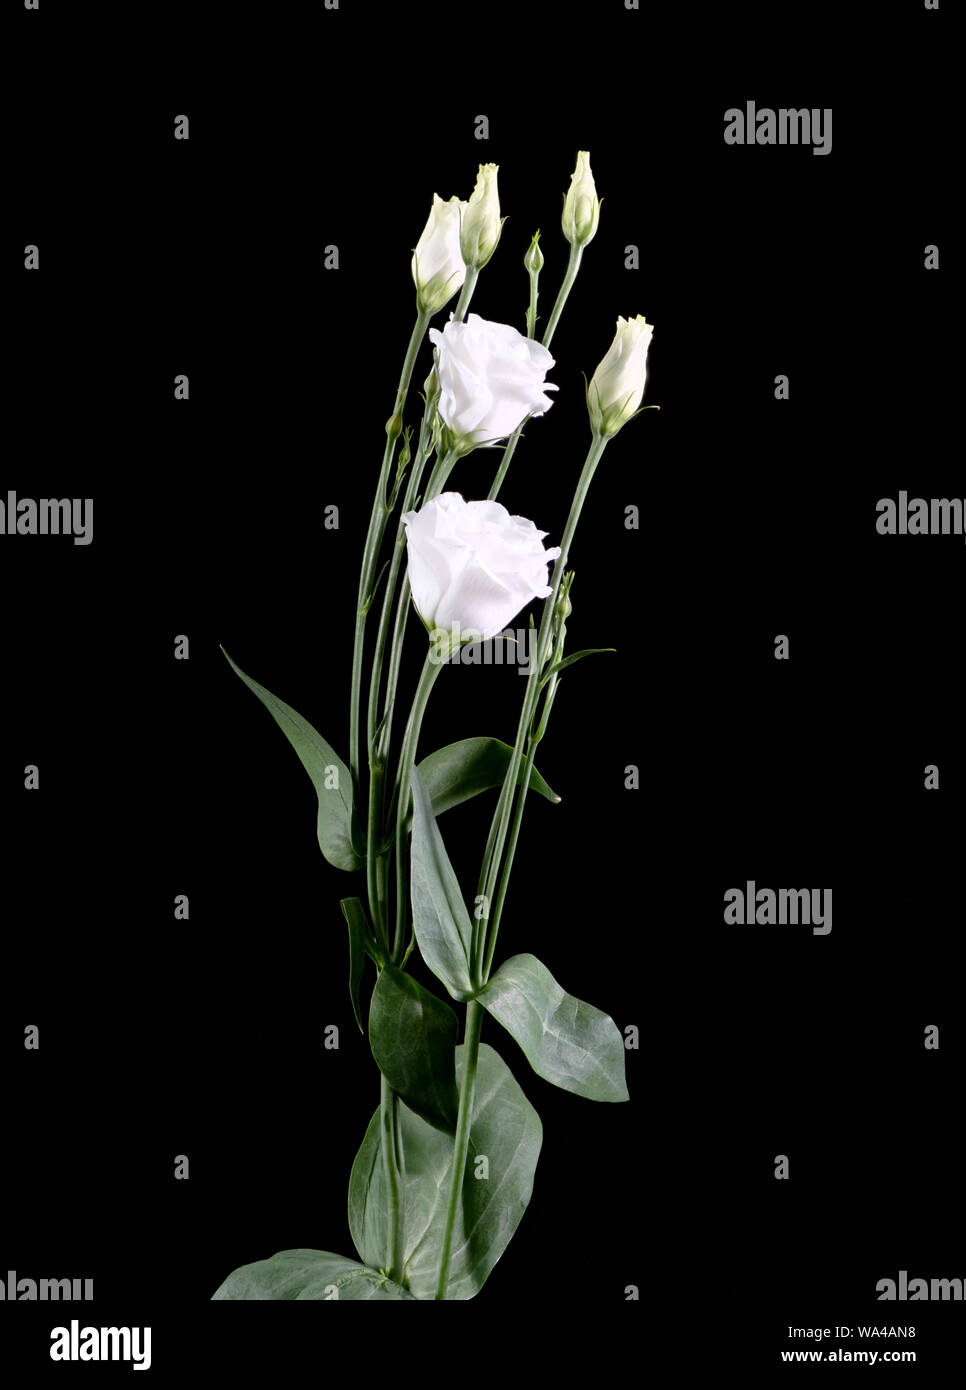 White Lisianthus (Eustoma) flowers against a black background Stock Photo